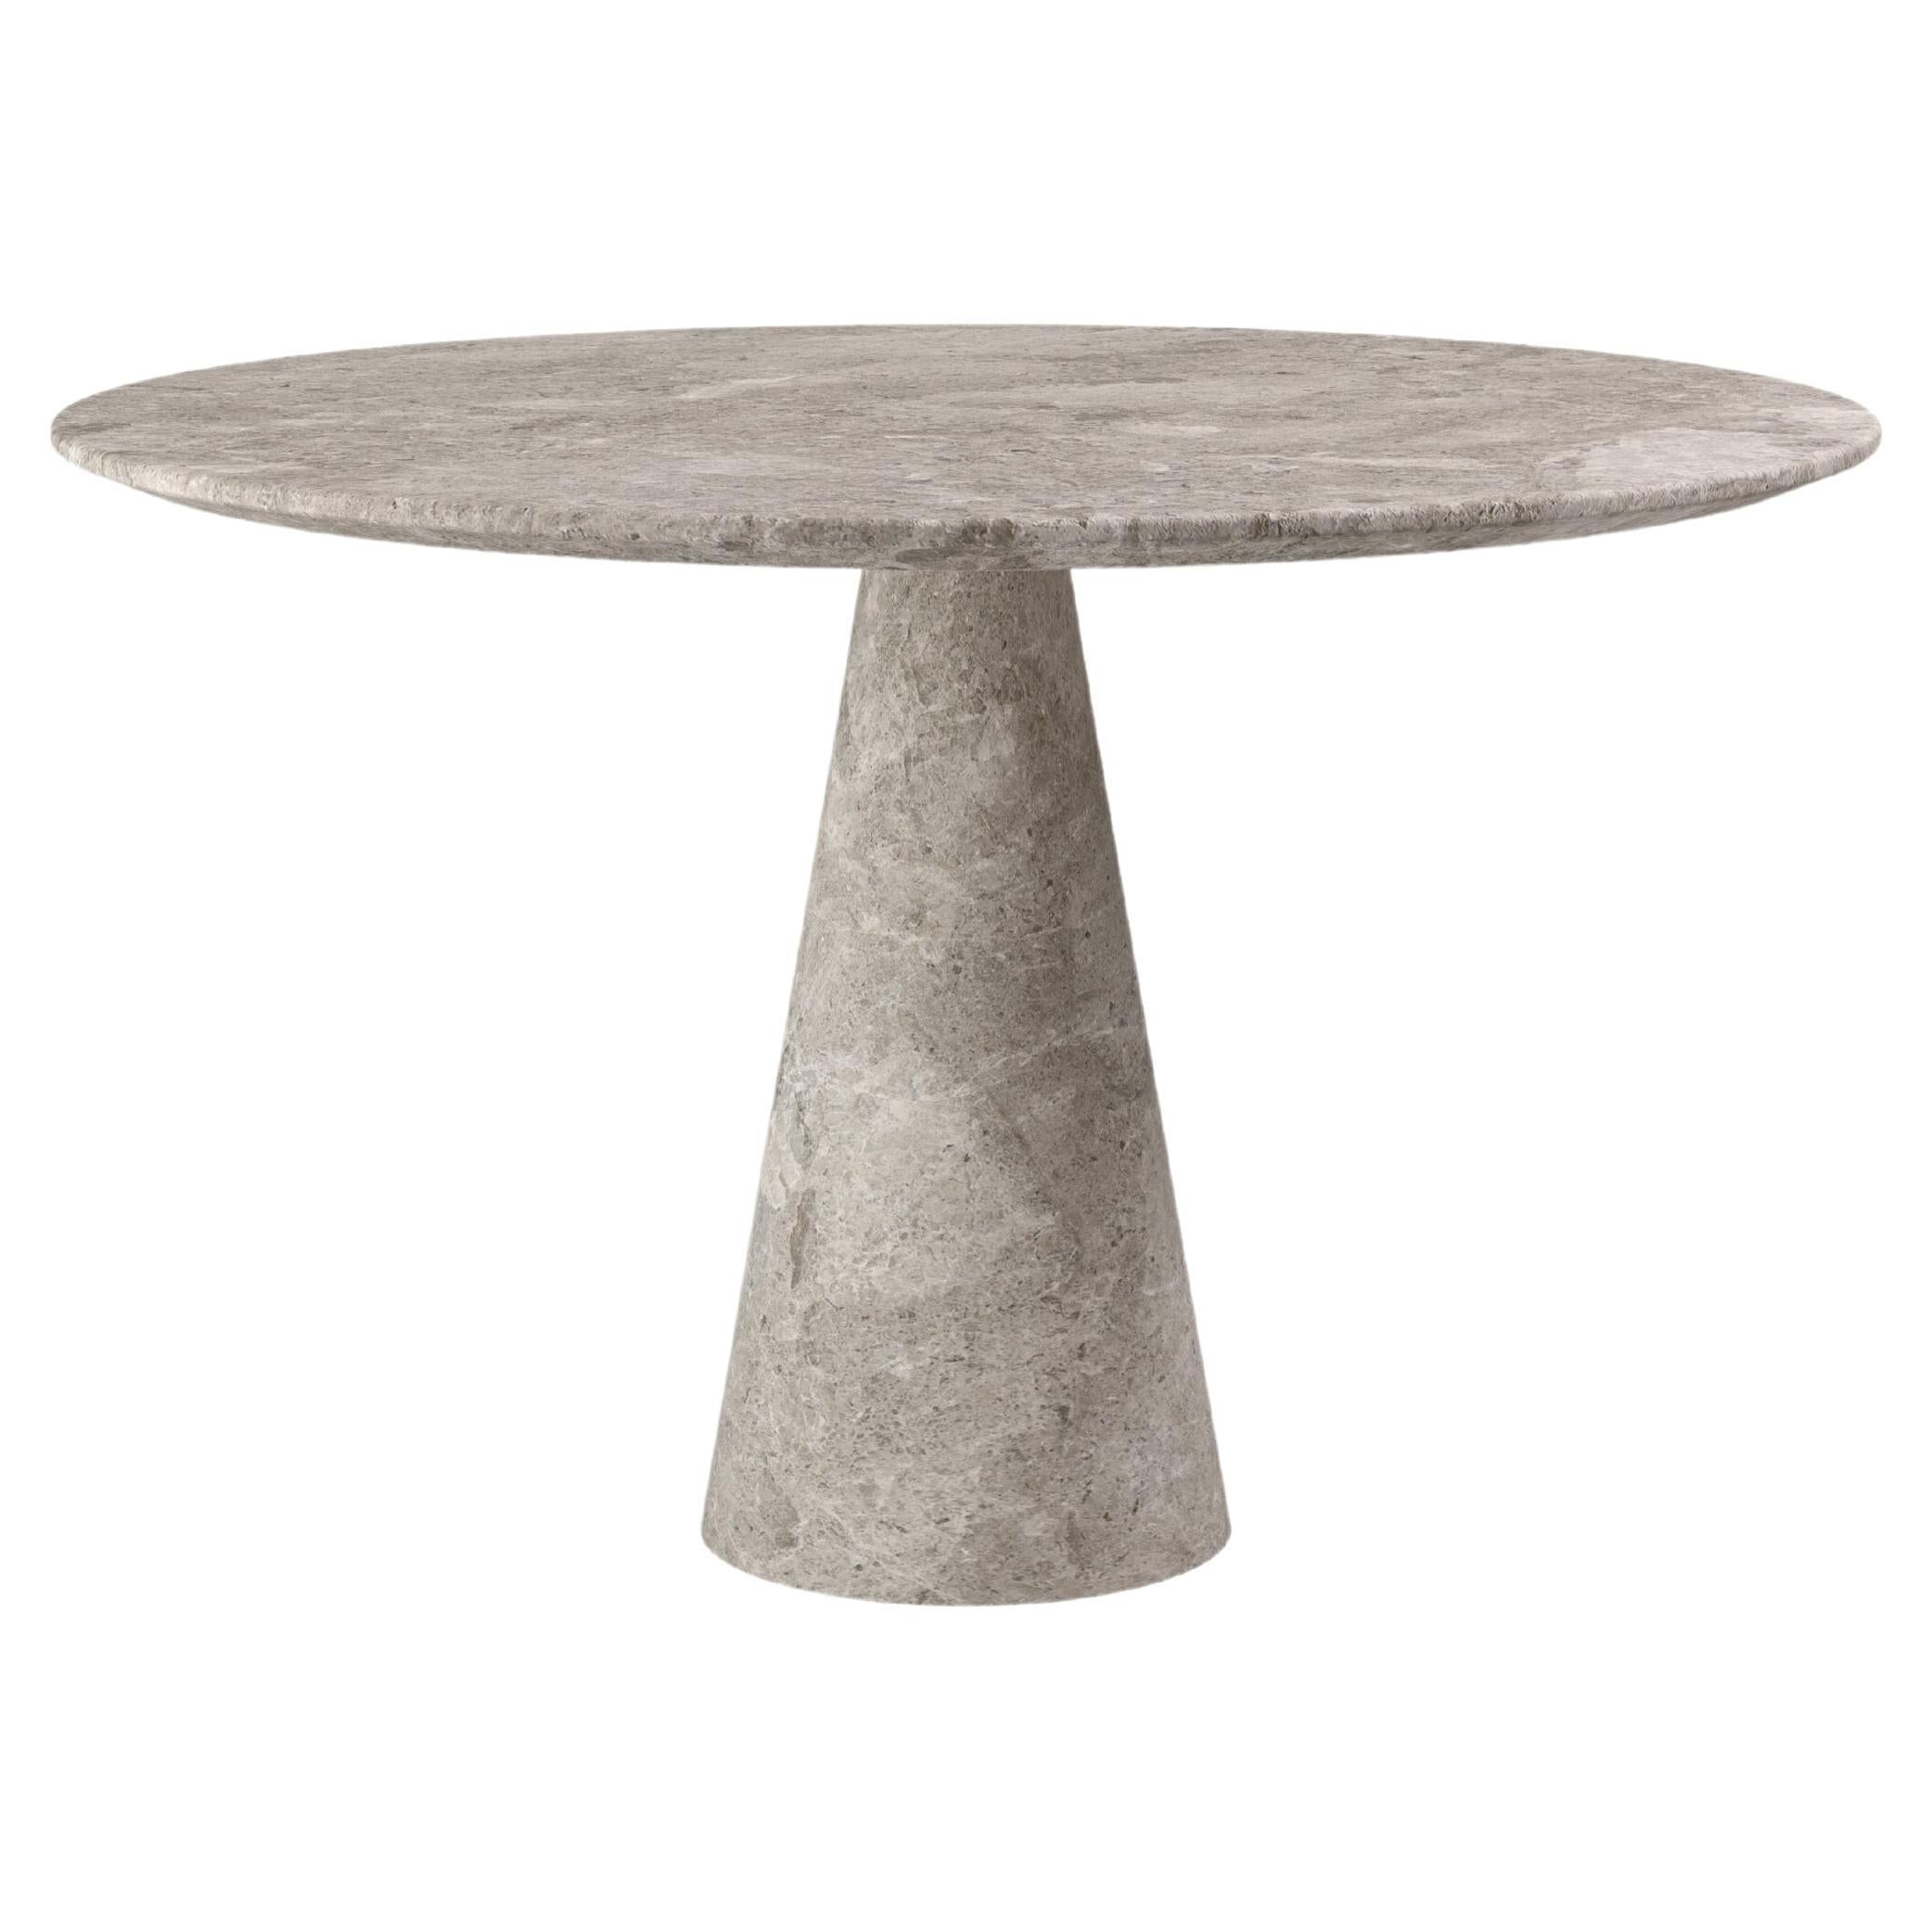 FORM(LA) Cono Round Dining Table 54”L x 54"W x 30”H Tundra Gray Marble For Sale